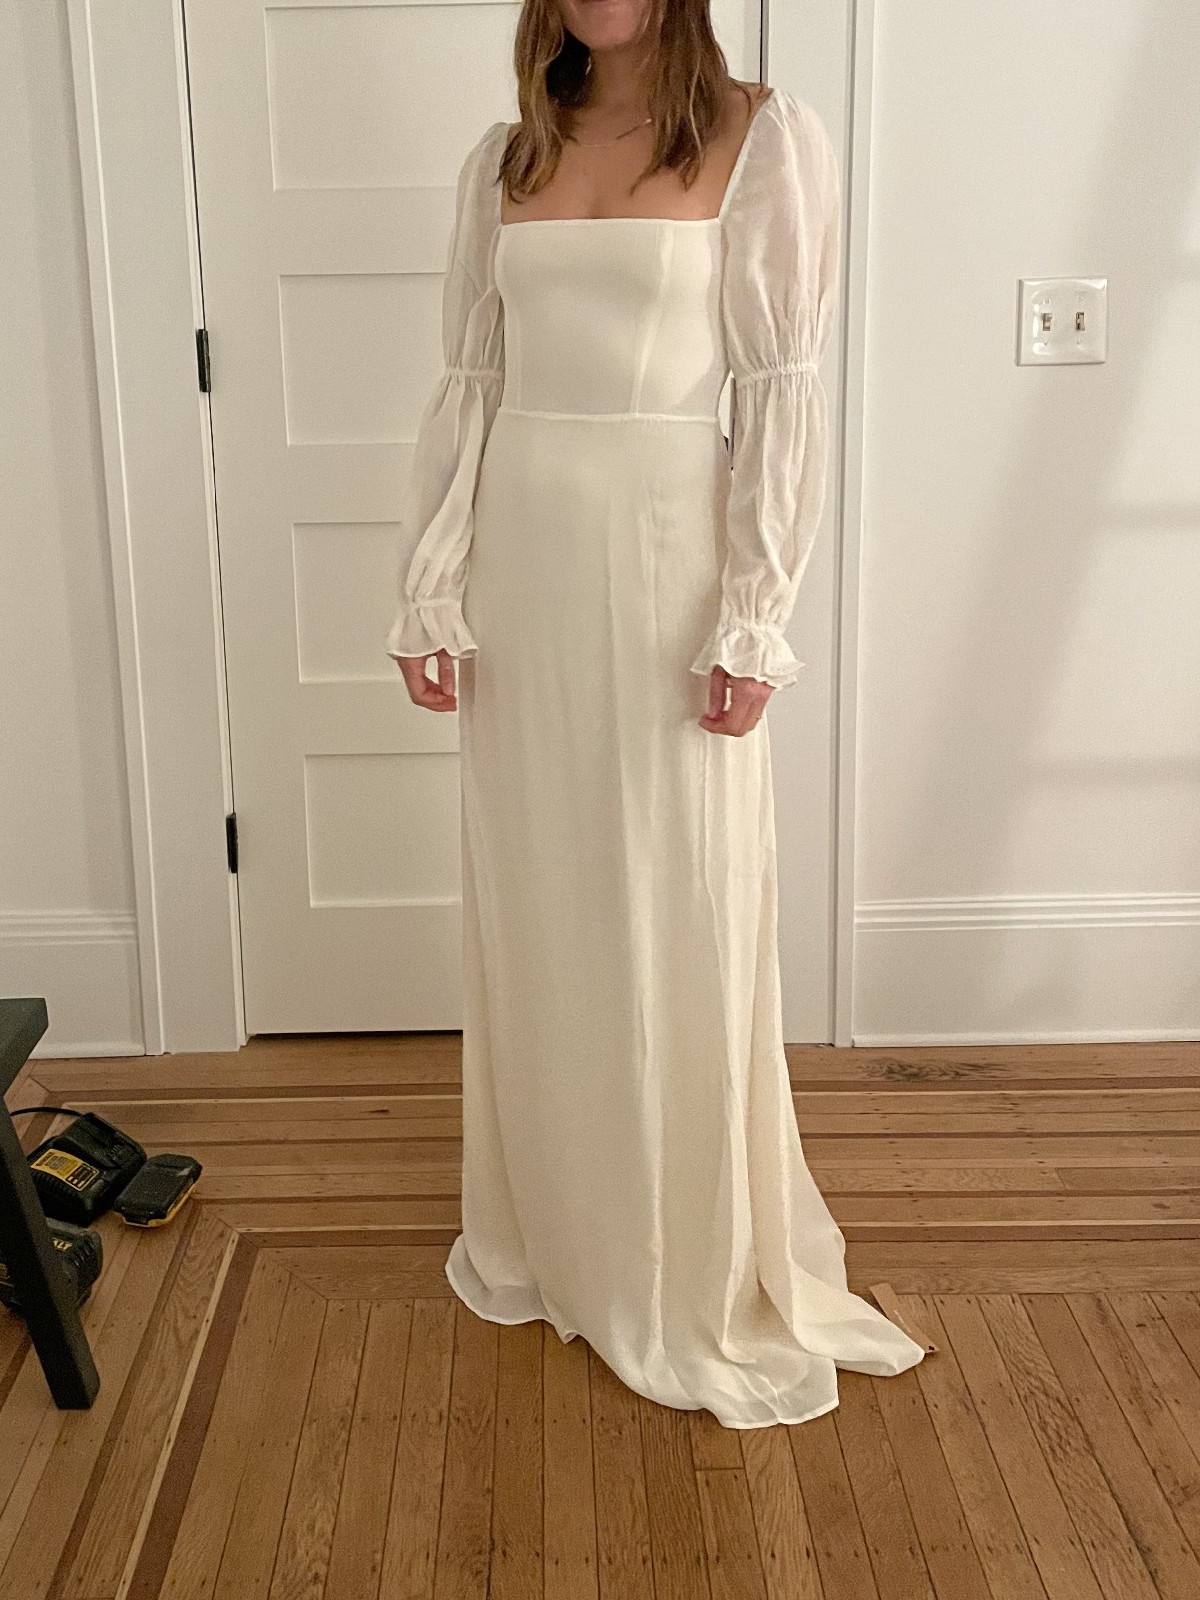 Reformation Stars Dress New Wedding Dress Save 8% - Stillwhite